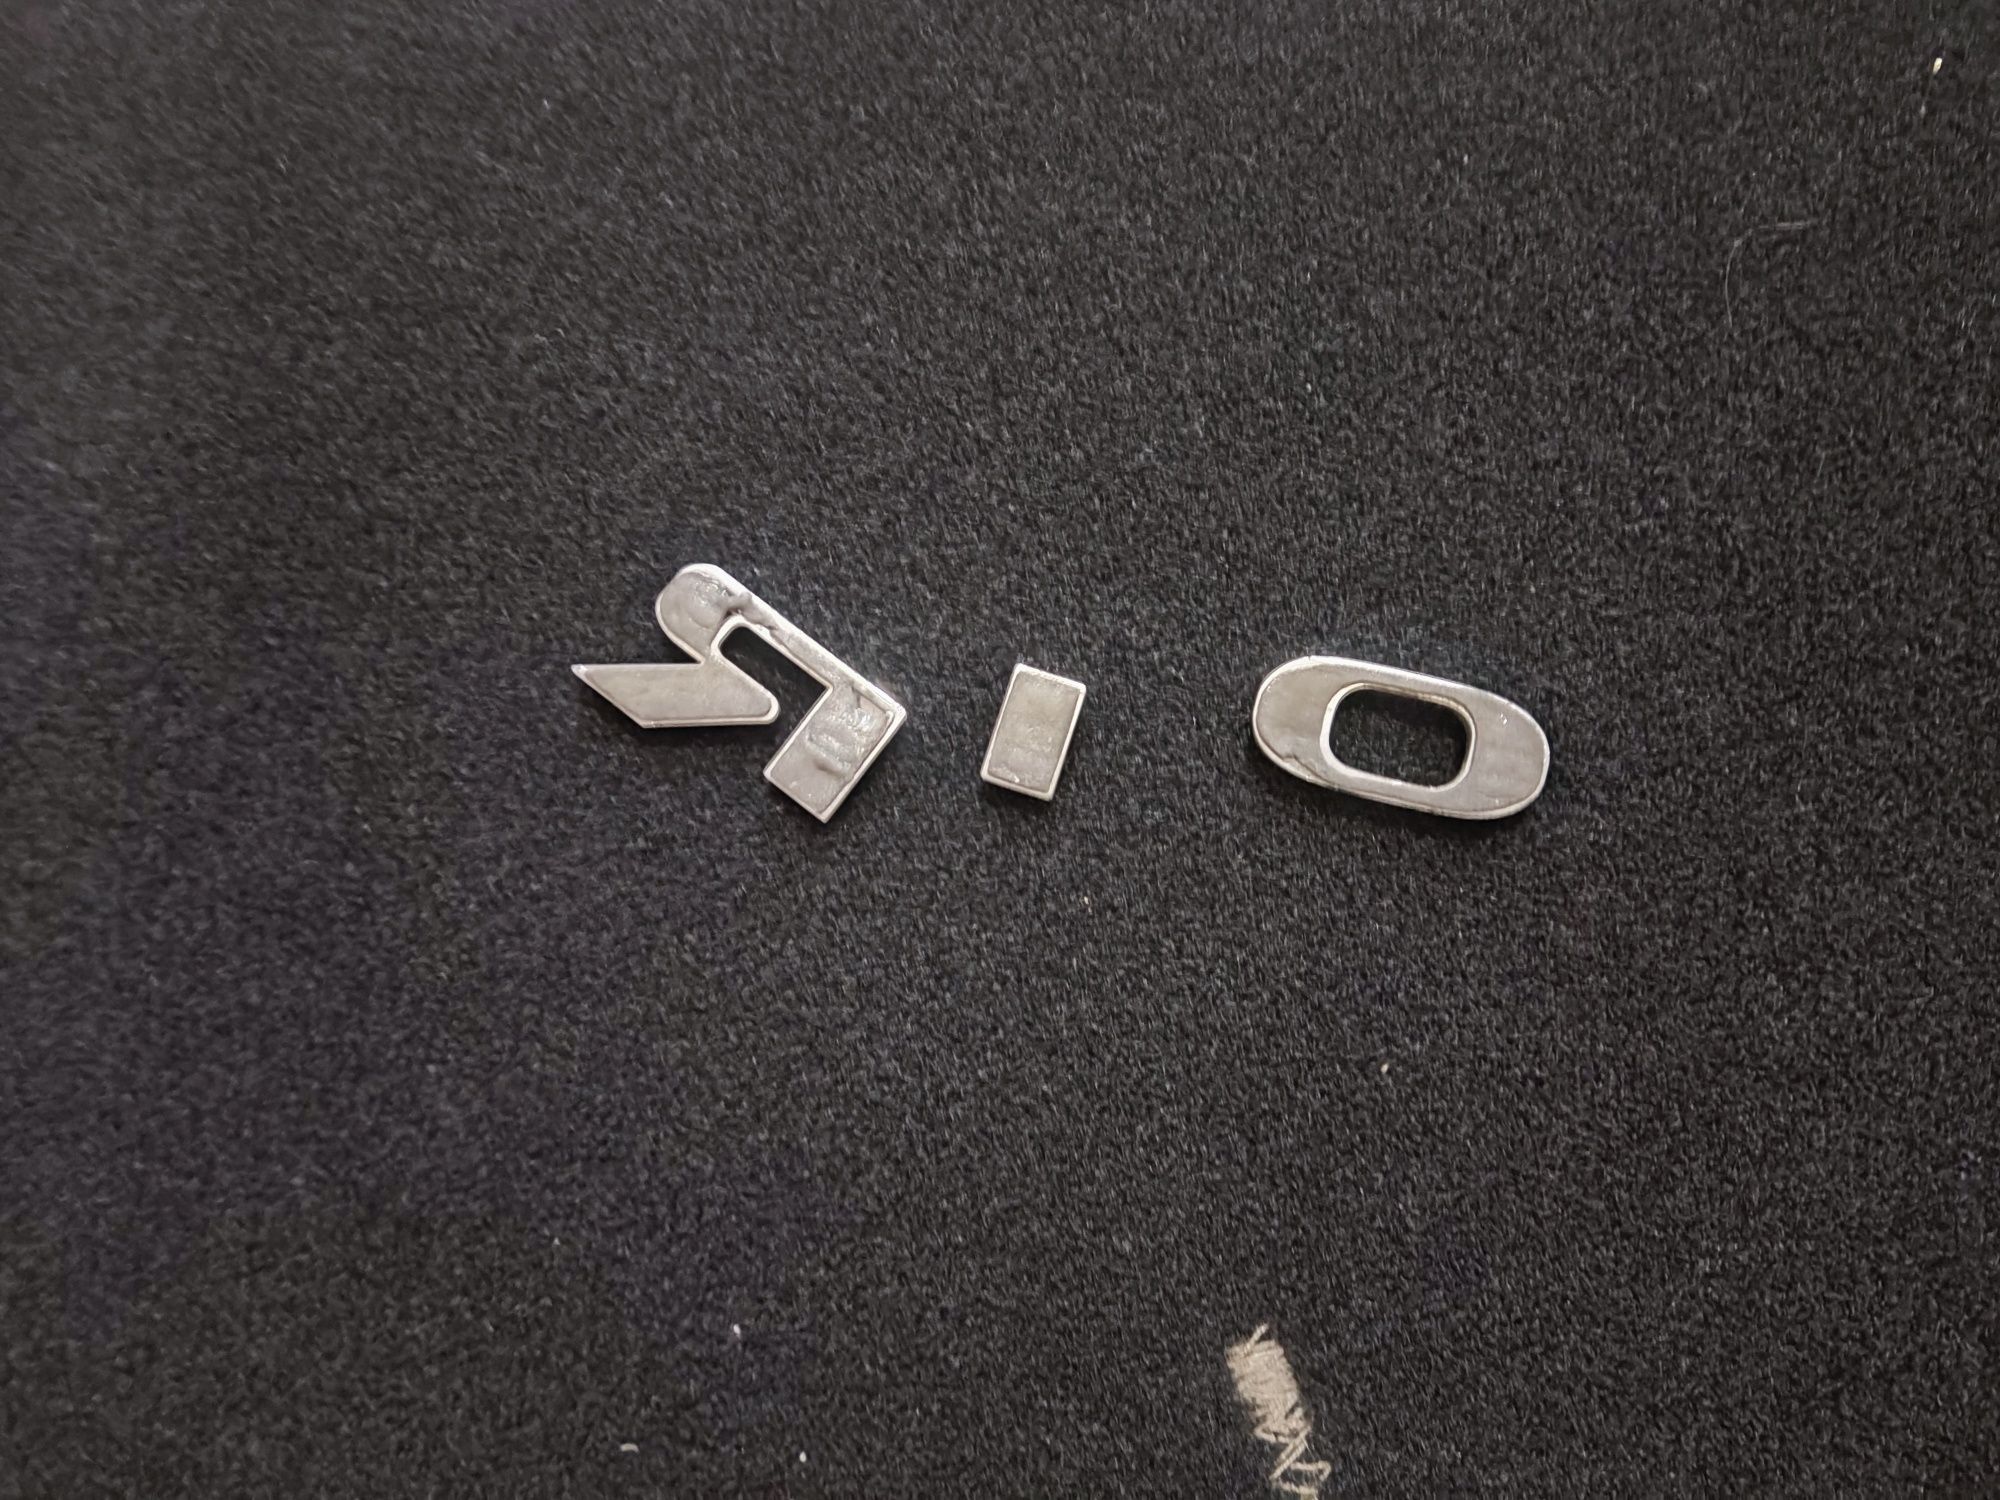 Kia Rio 2014 аксессуары